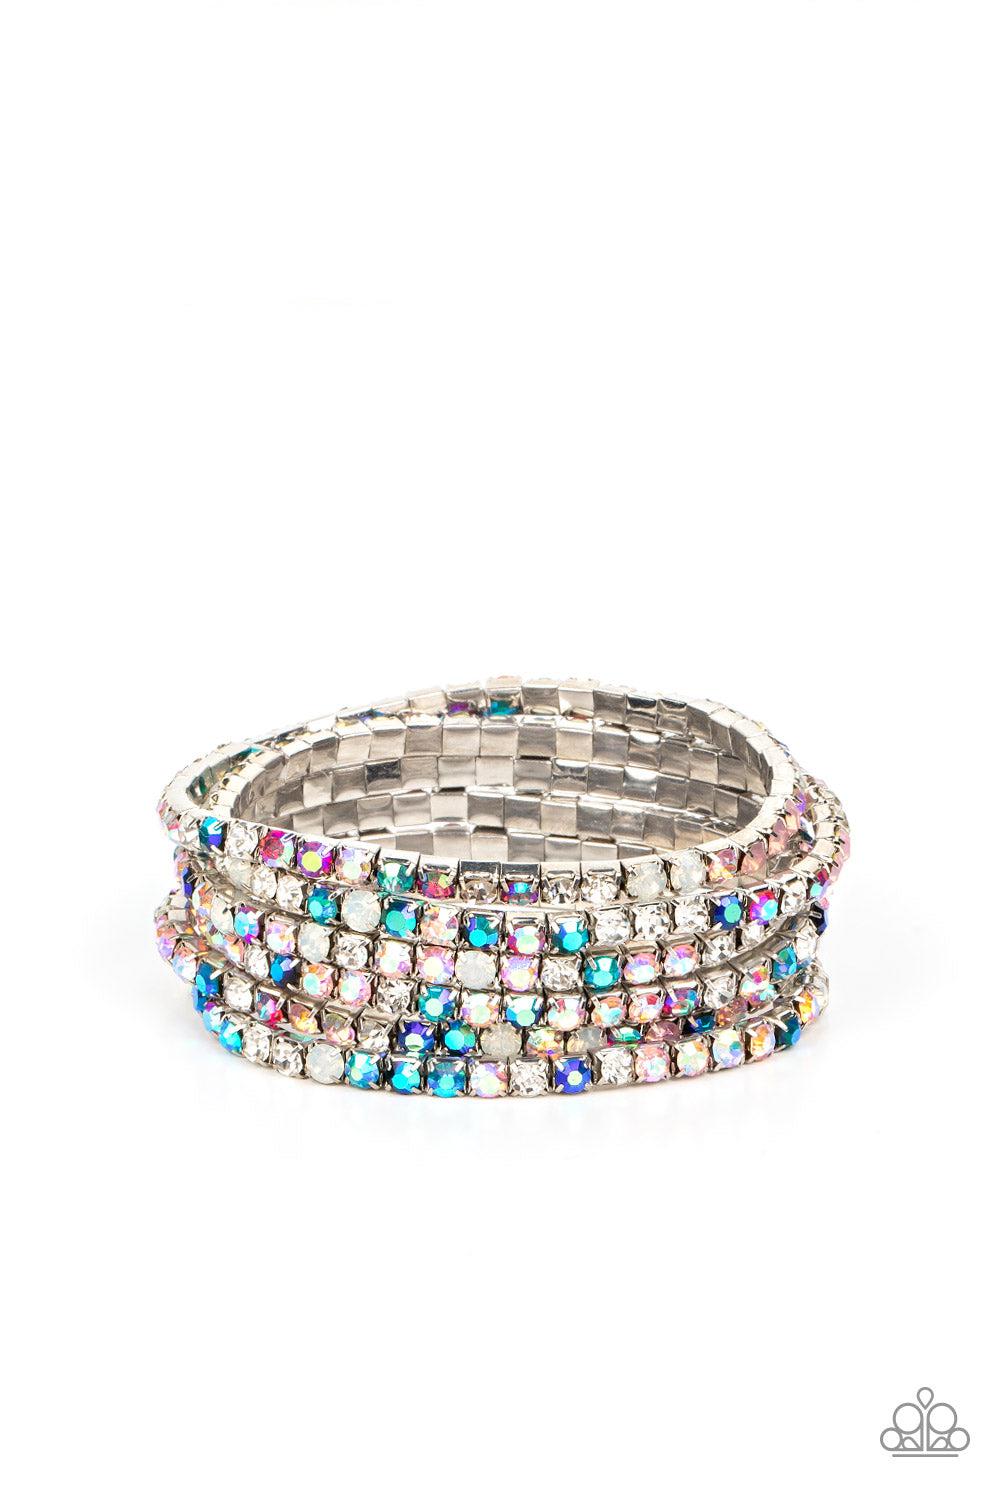 Rock Candy Range Multi Bracelet - Paparazzi Accessories- lightbox - CarasShop.com - $5 Jewelry by Cara Jewels